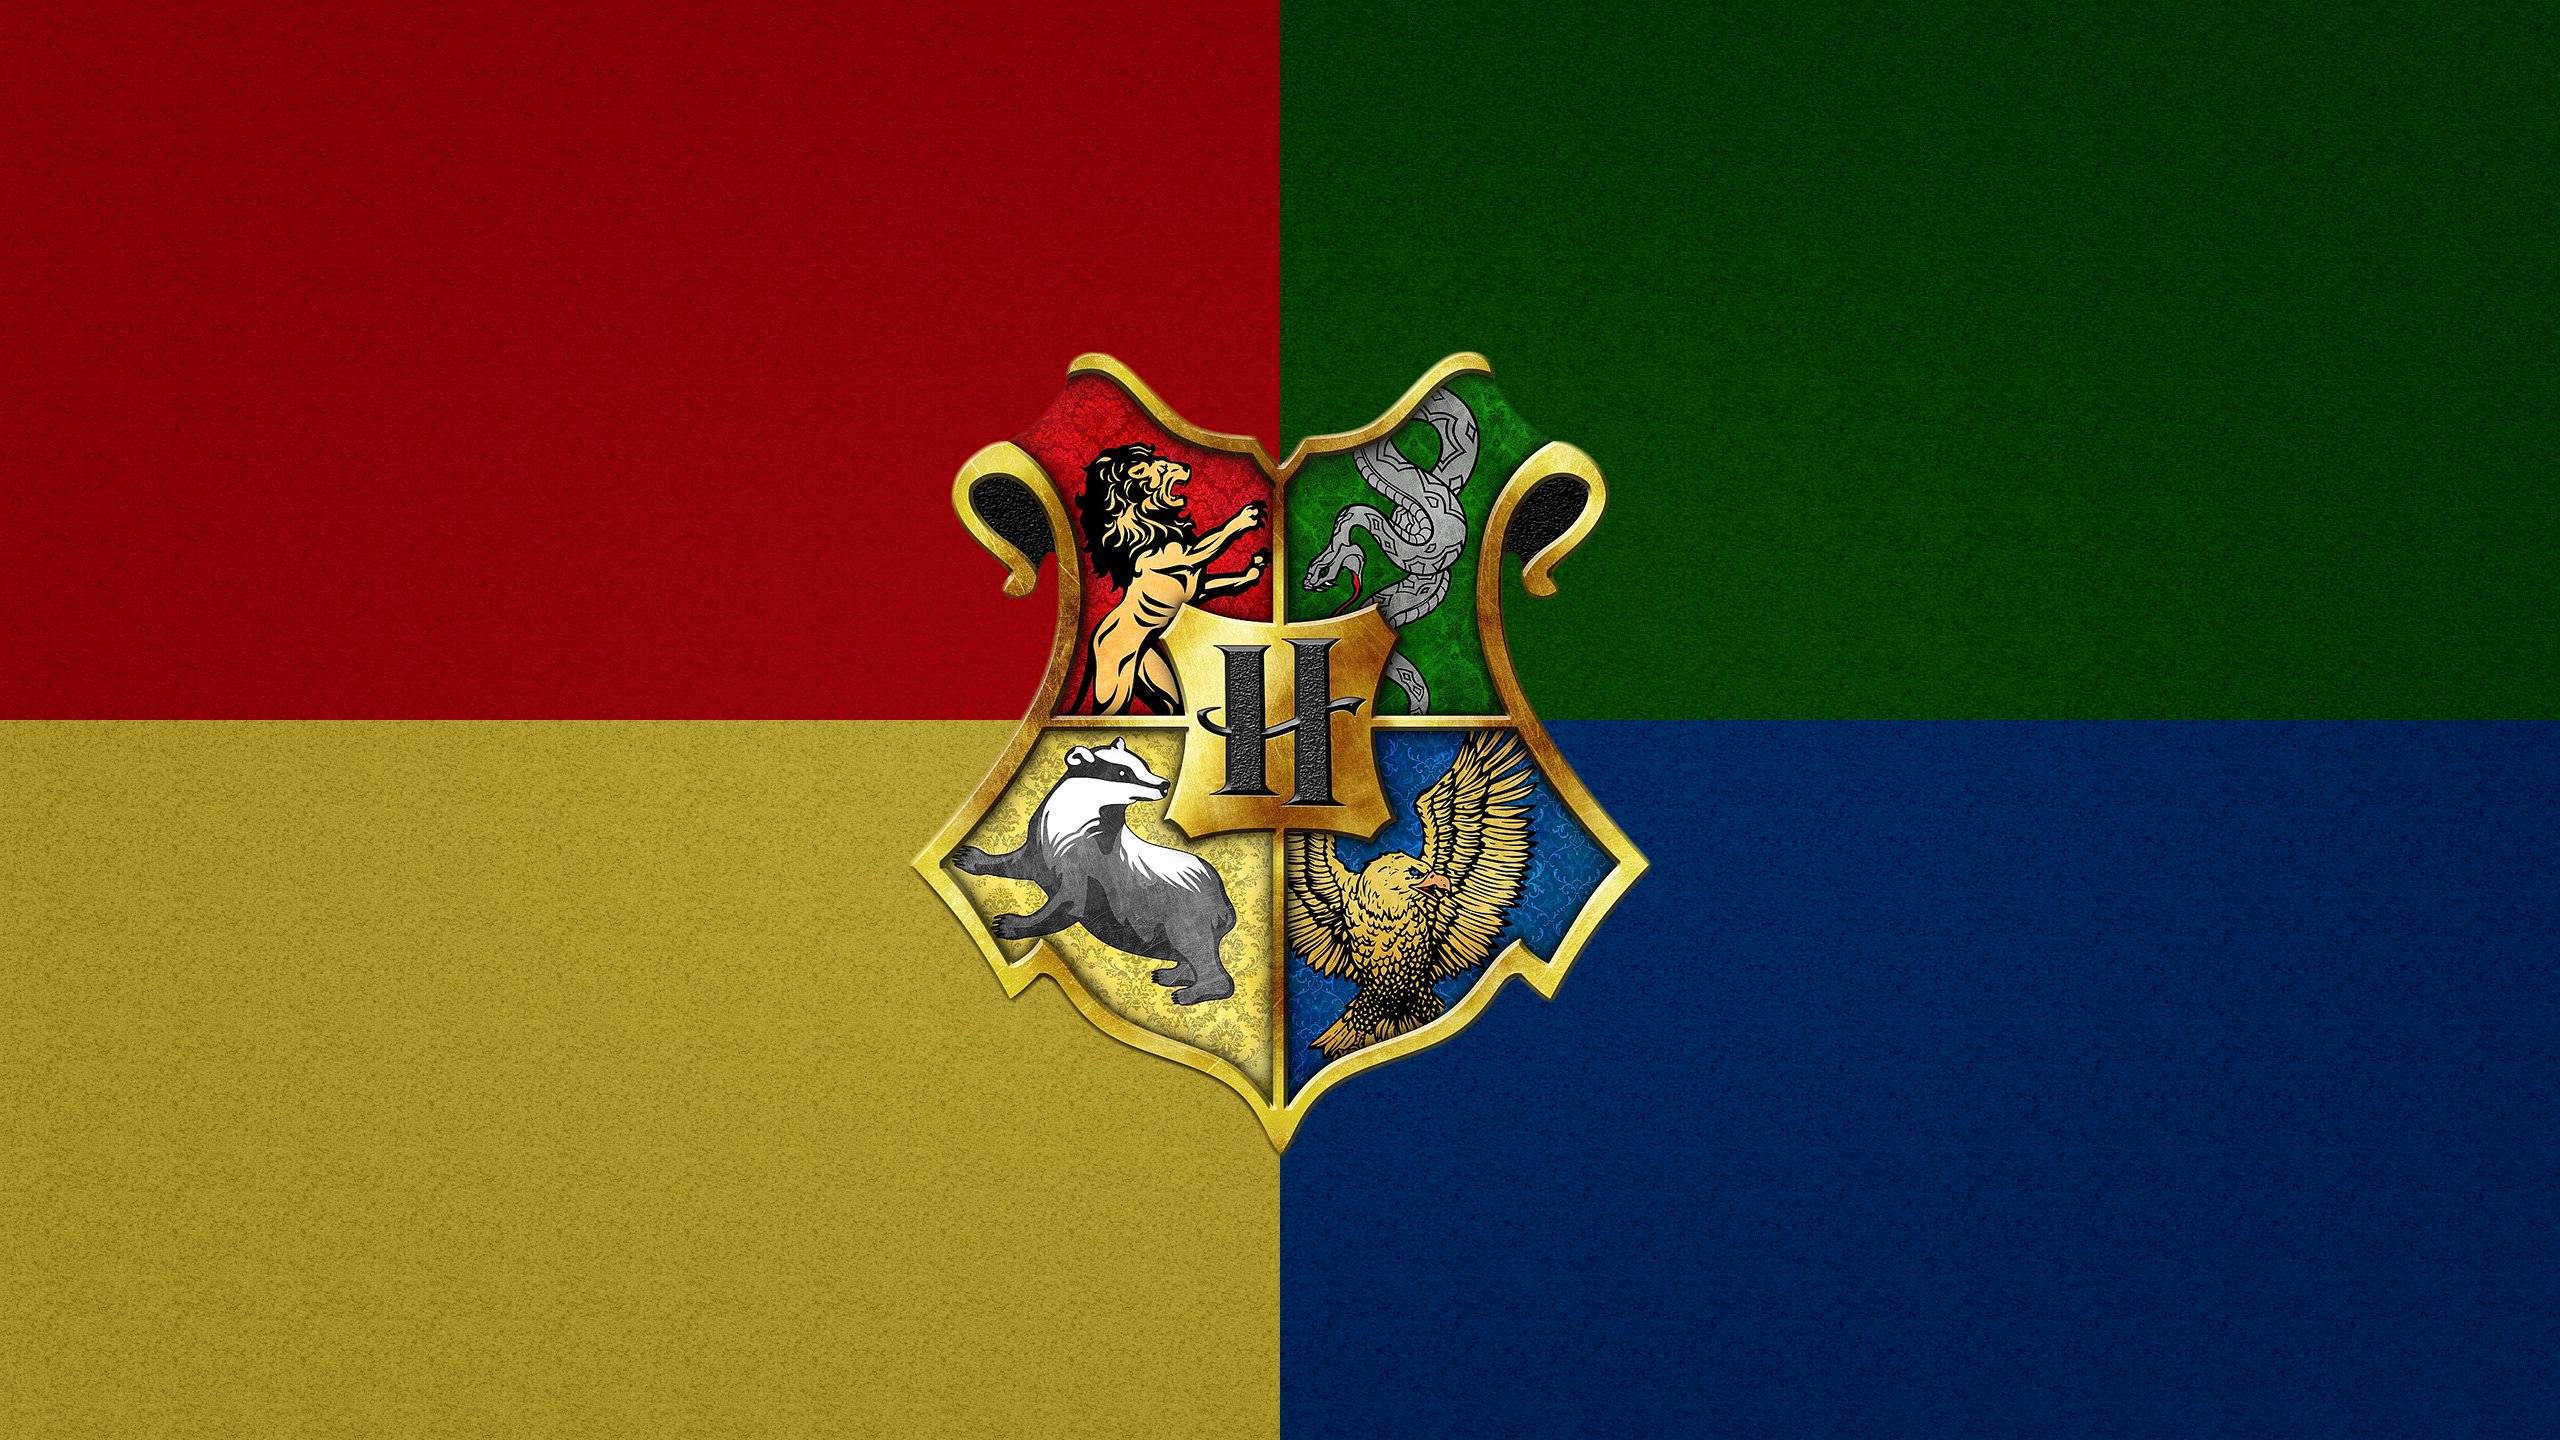 Harry Potter Badges: Gryffindor, Slytherin, Hufflepuff and Ravenclaw Wallpaper 2k Quad HD